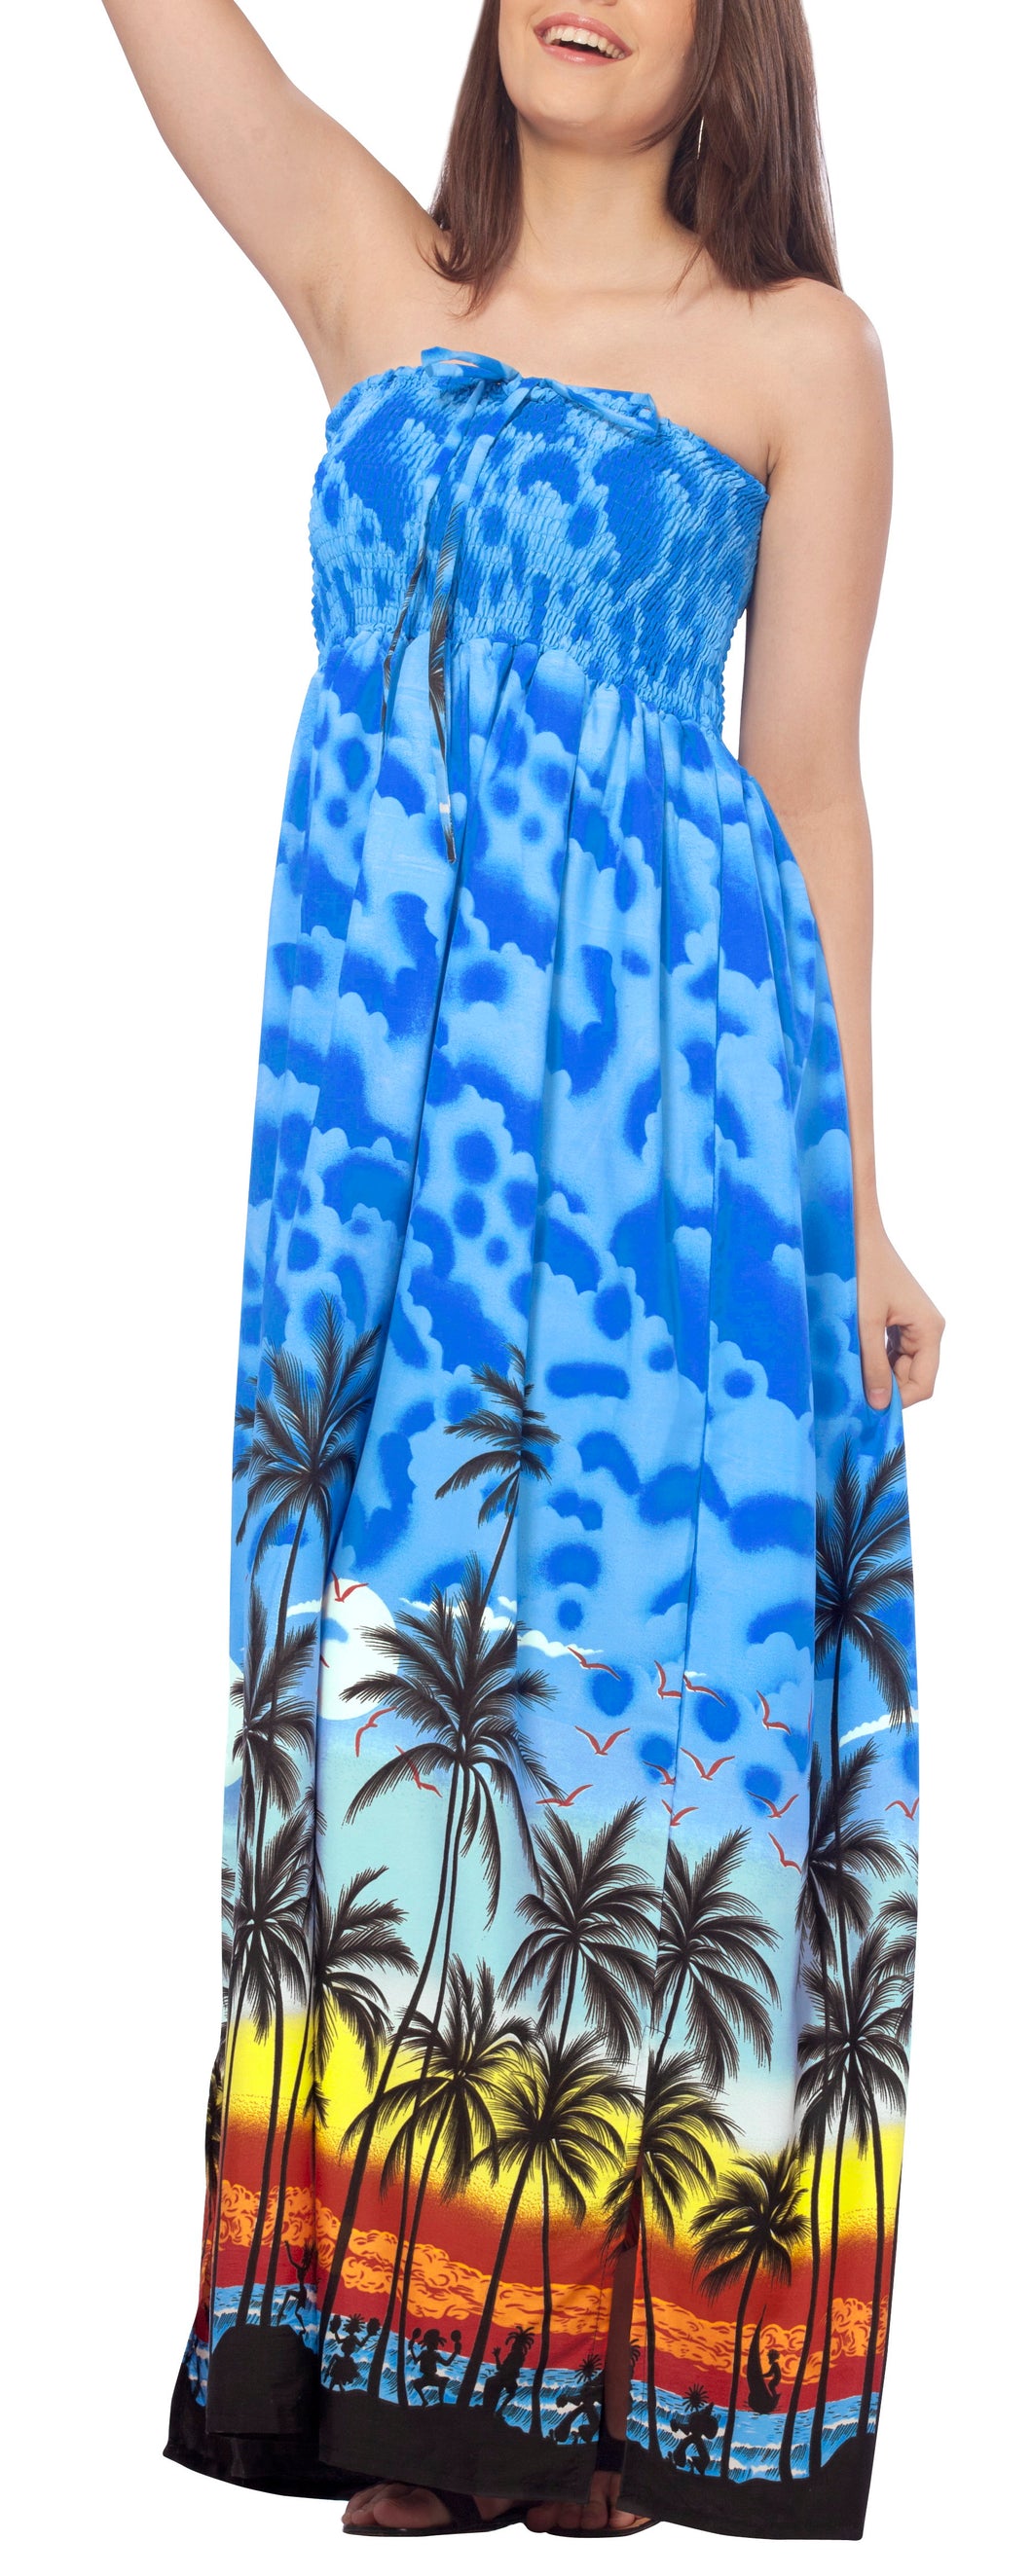 la-leela-soft-printed-beachwear-kaftan-loose-long-top-bright-blue-1528-one-size-blue_g306